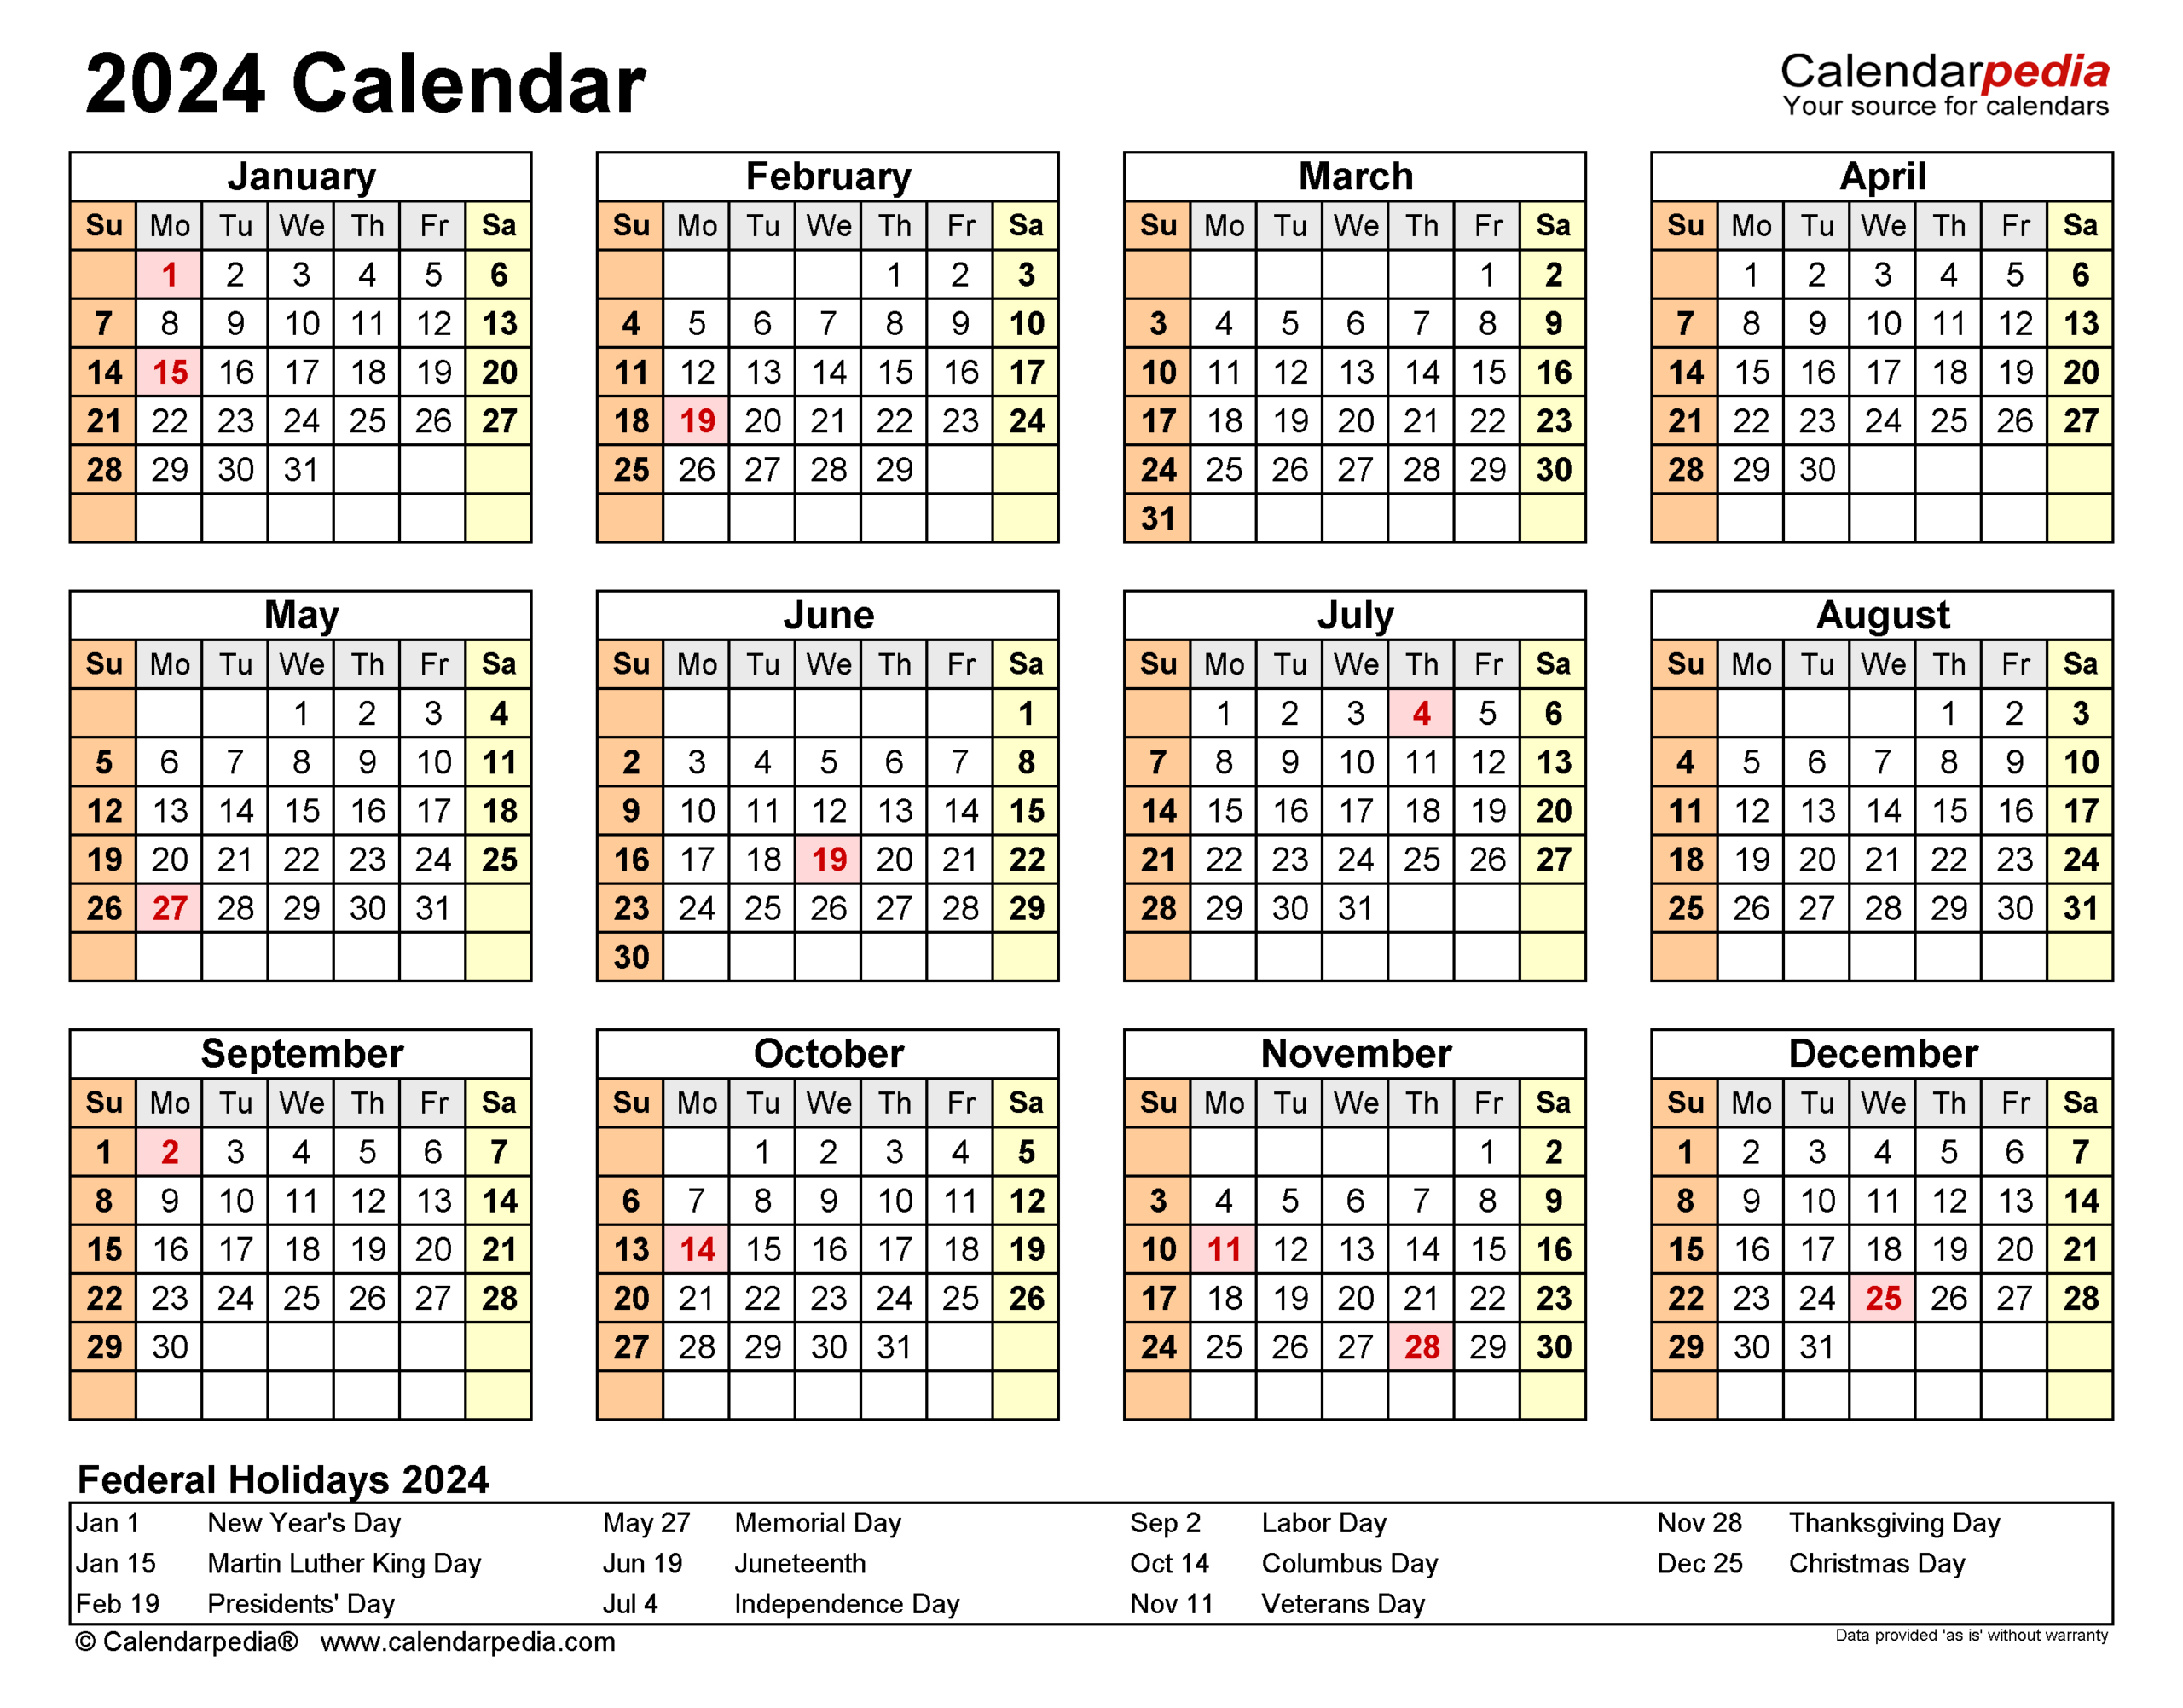 2024 Calendar - Free Printable Excel Templates - Calendarpedia with regard to Free Printable Calendar 2024 Windows